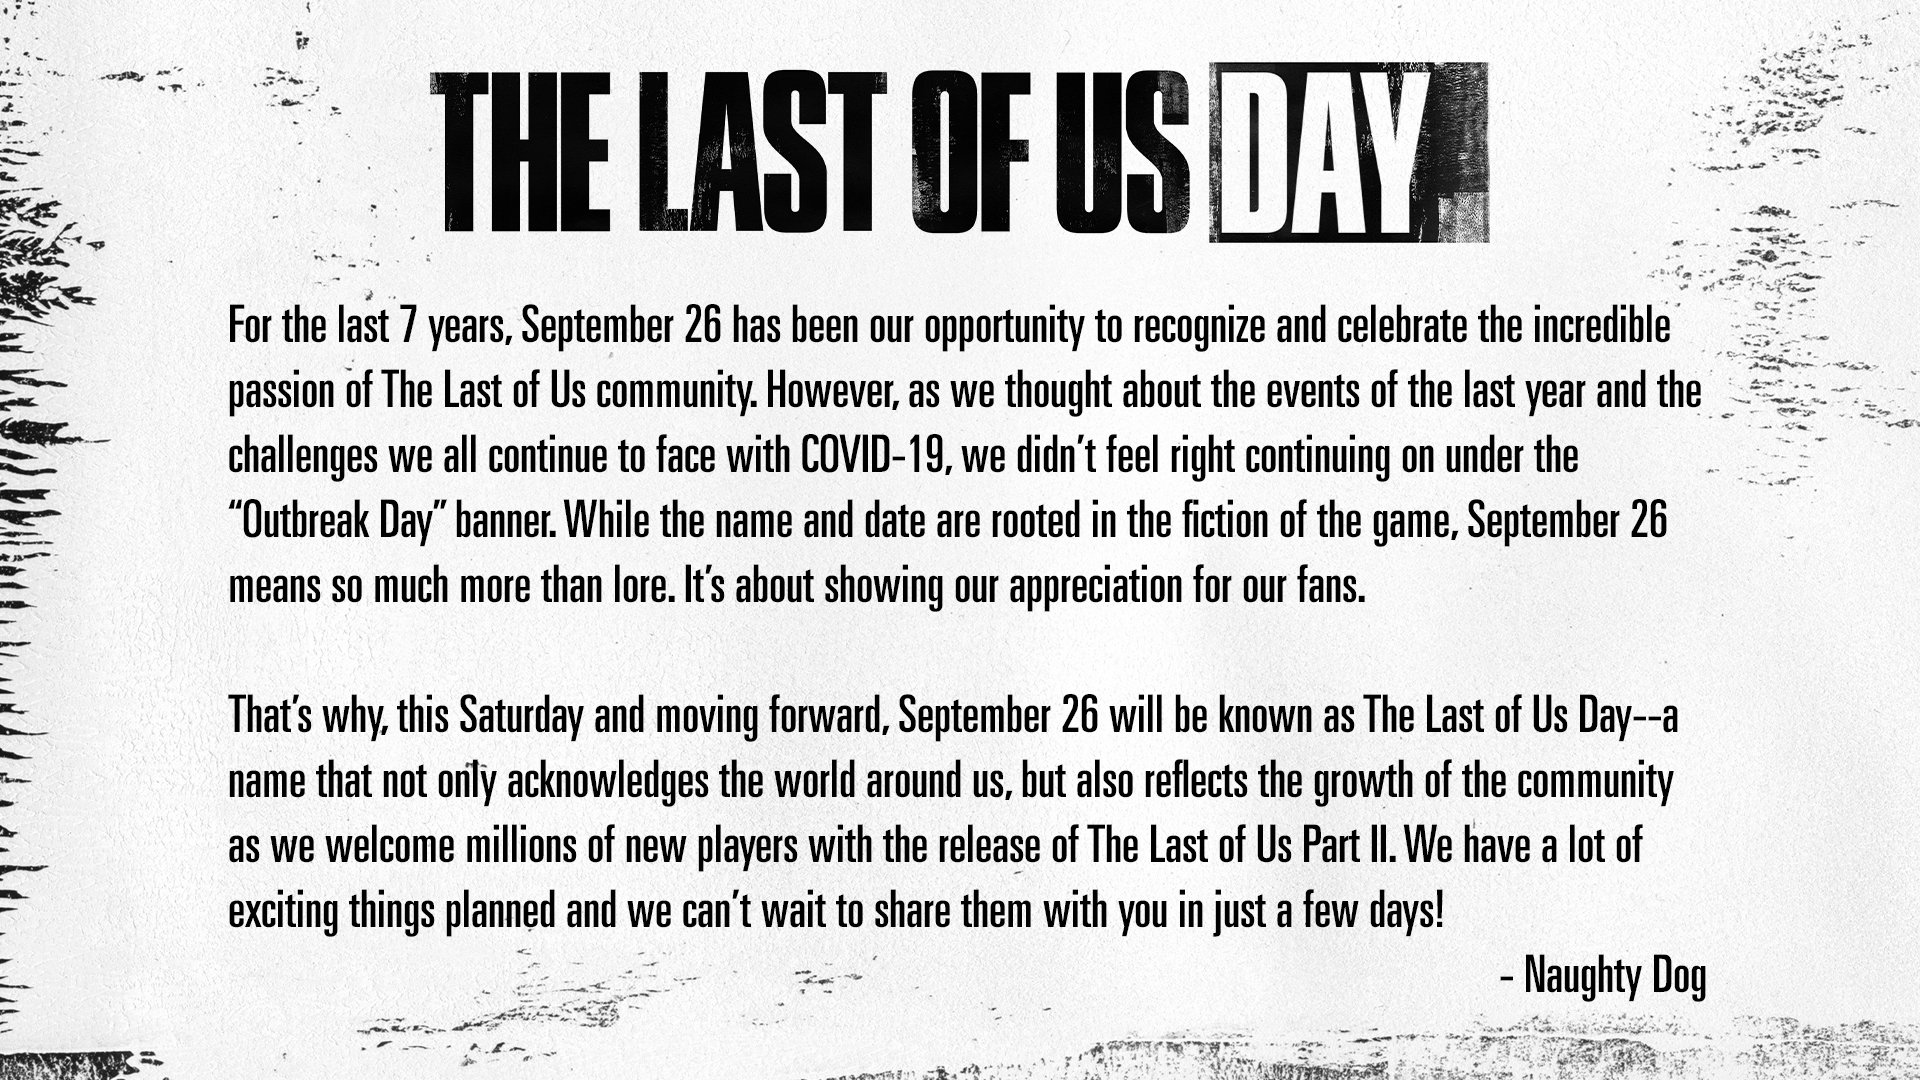 Naughty Dog, LLC - To celebrate #TheLastofUs Part I's PC debut